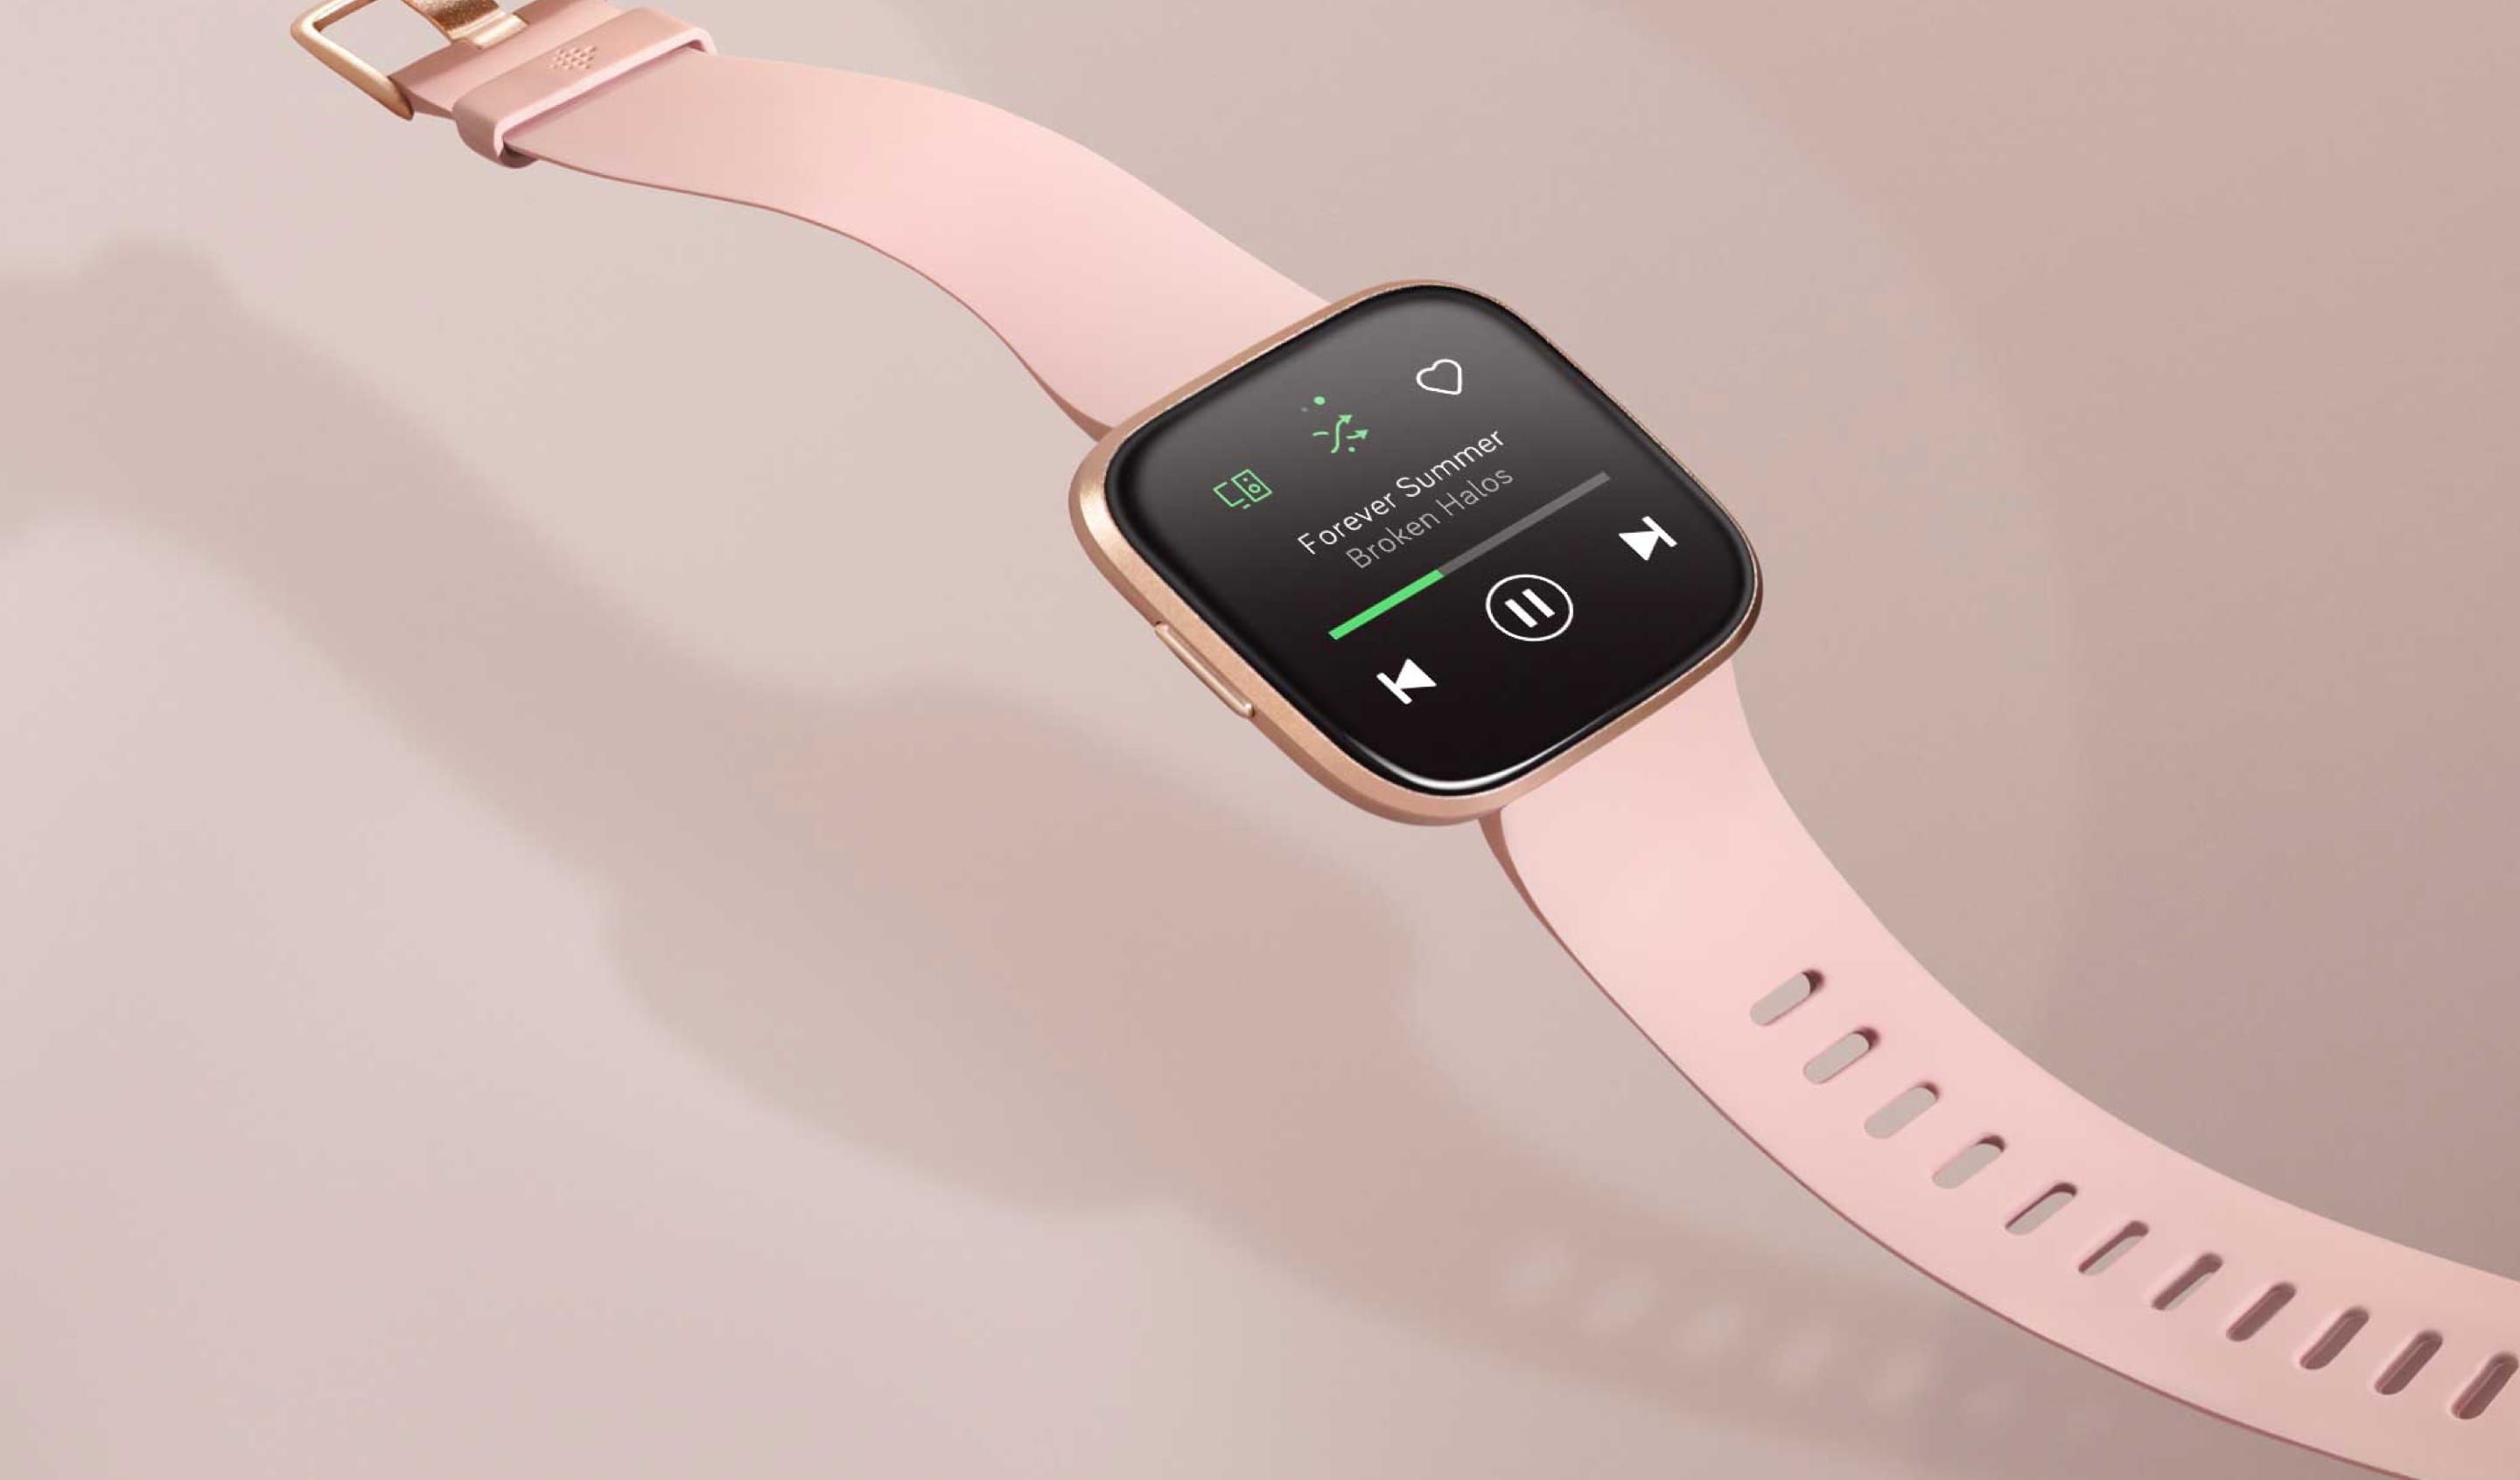 Fitbit Versa 2 Health & Fitness Watch